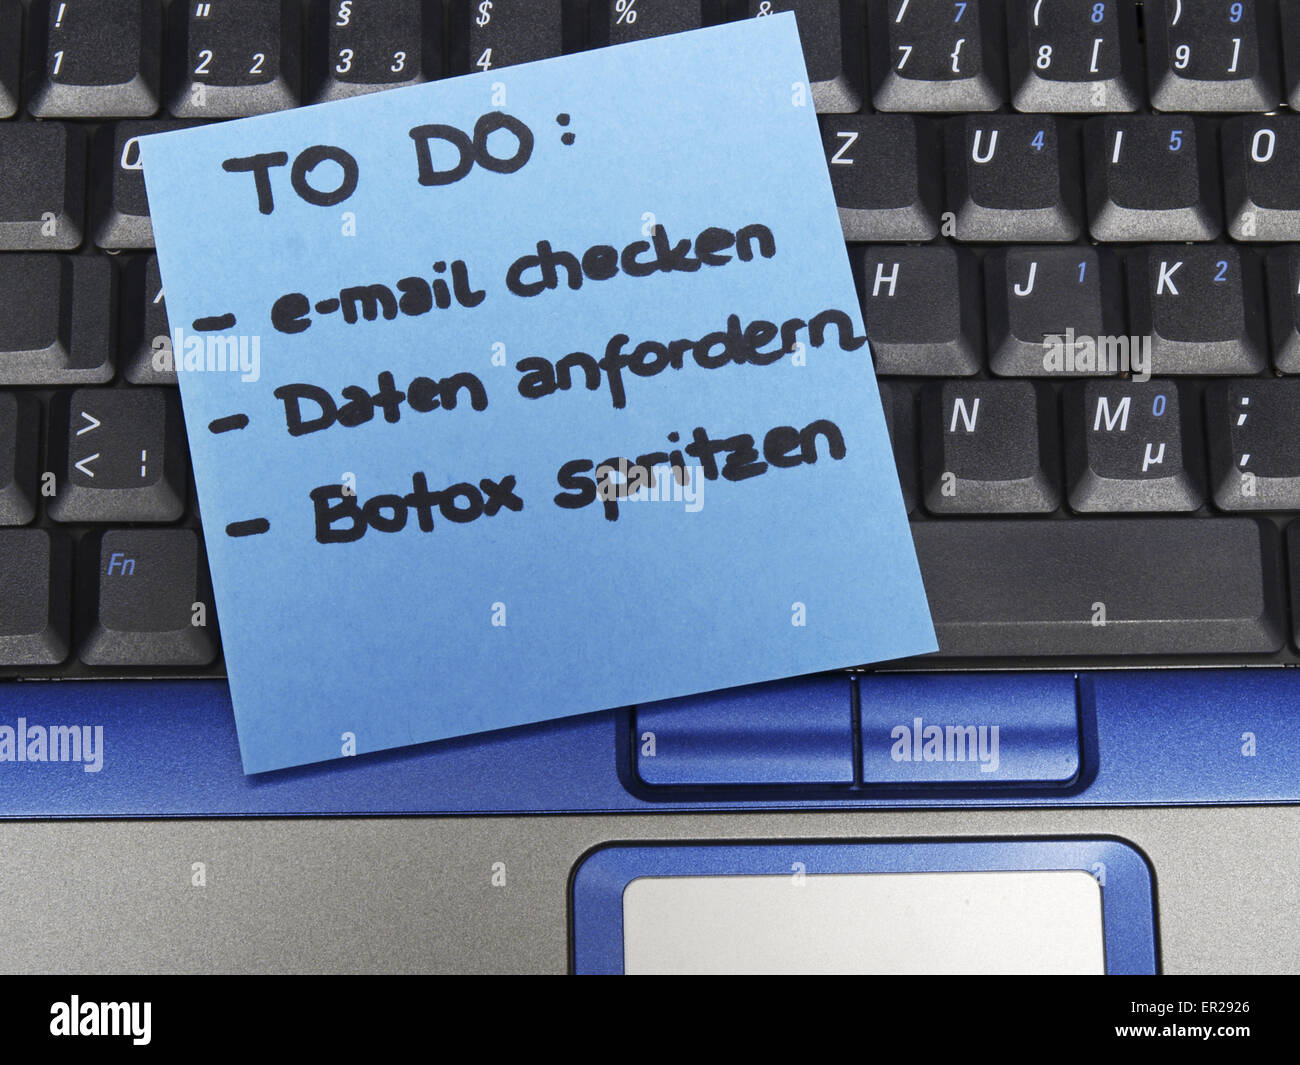 Memo note on notebook, to do e-mail checken, Daten anfordern, Botox spritzen, to do check e-mail, ask for data, inject botox Stock Photo